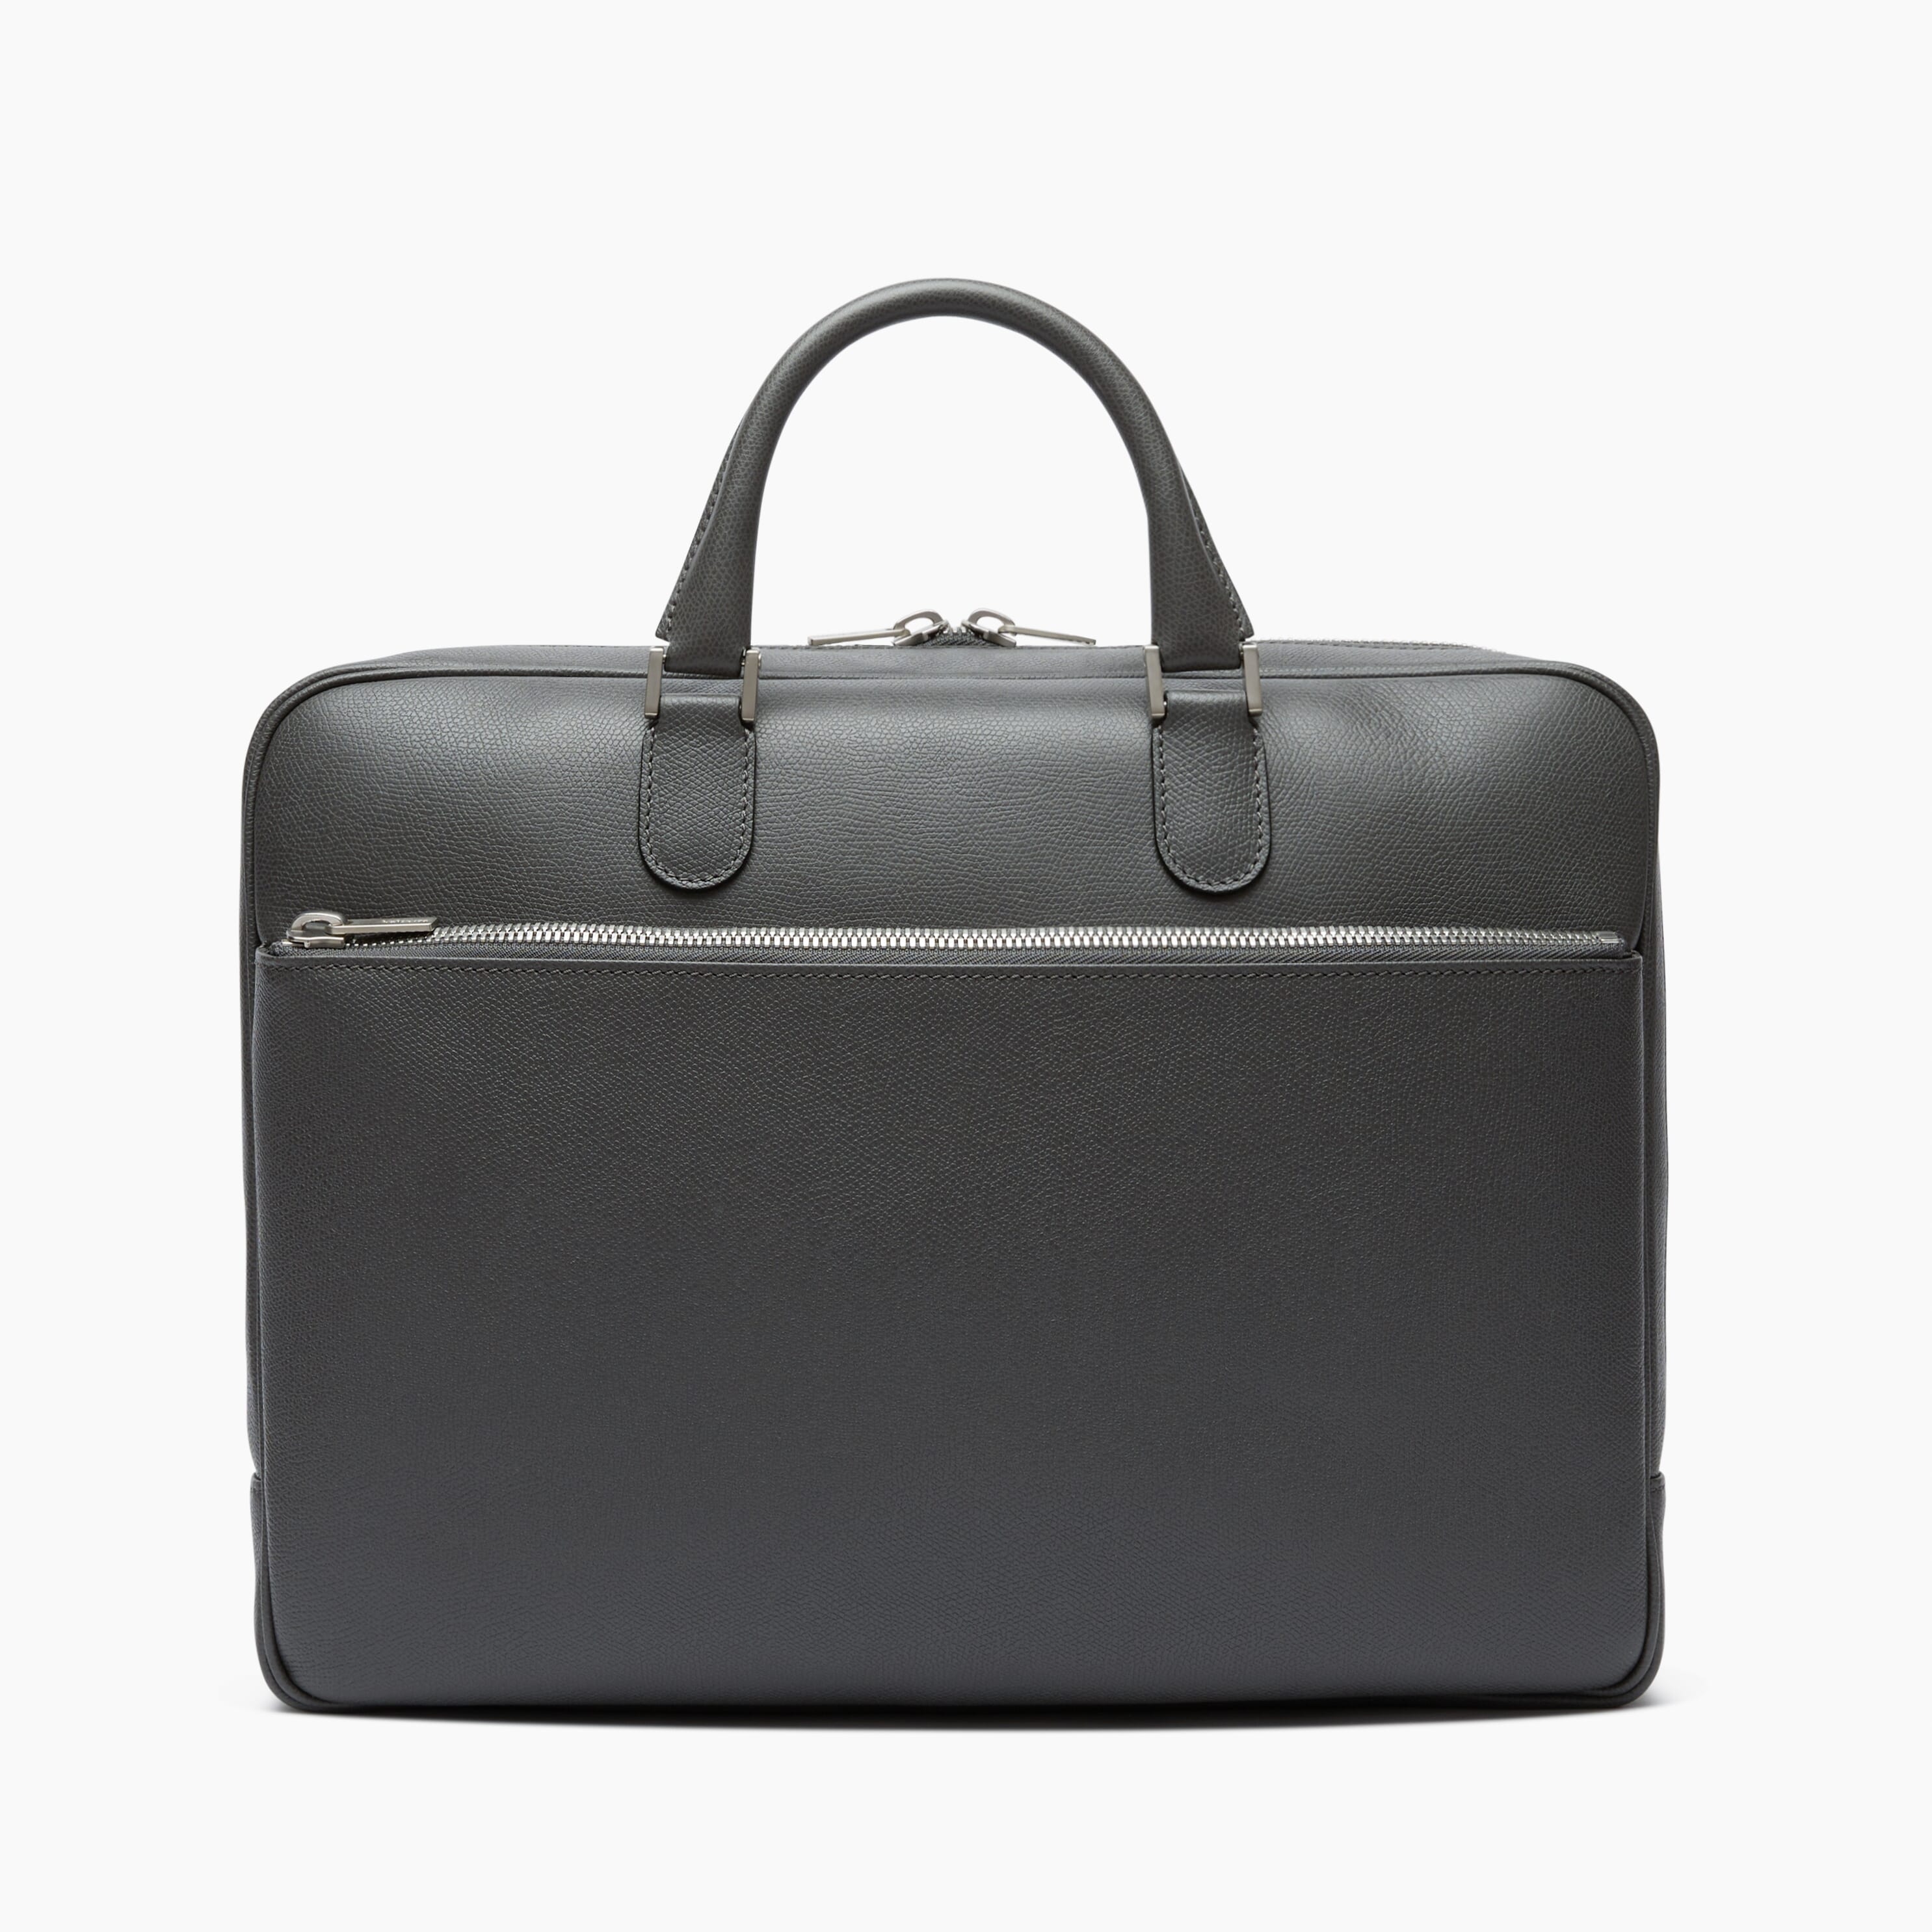 Avietta Briefcase with Zip 24h - Smokey Grey - Vitello VS - Valextra - 1